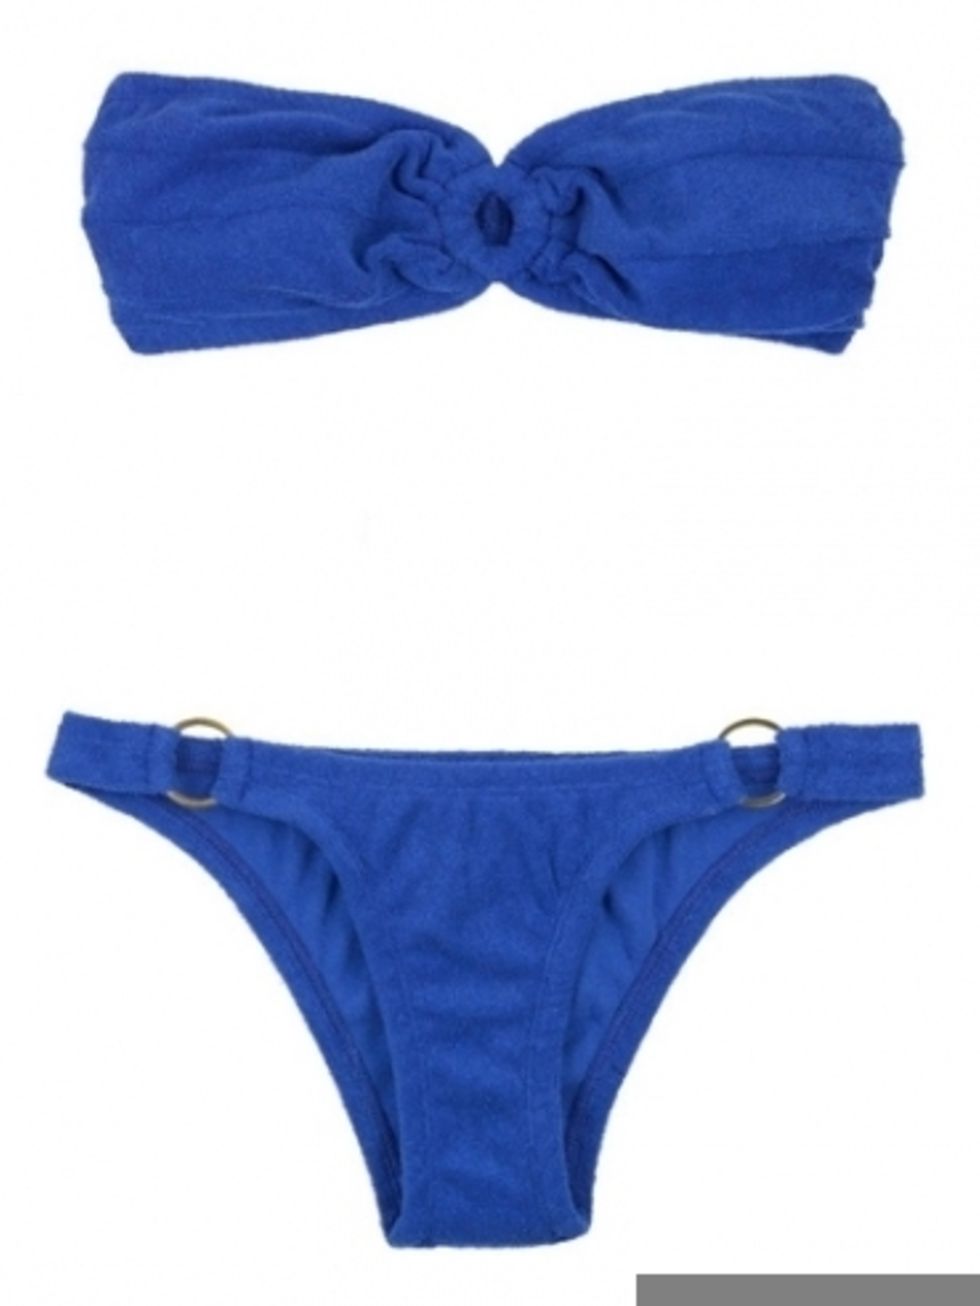 Blue, Undergarment, Electric blue, Costume accessory, Azure, Swimsuit bottom, Cobalt blue, Briefs, Swimwear, Underpants, 